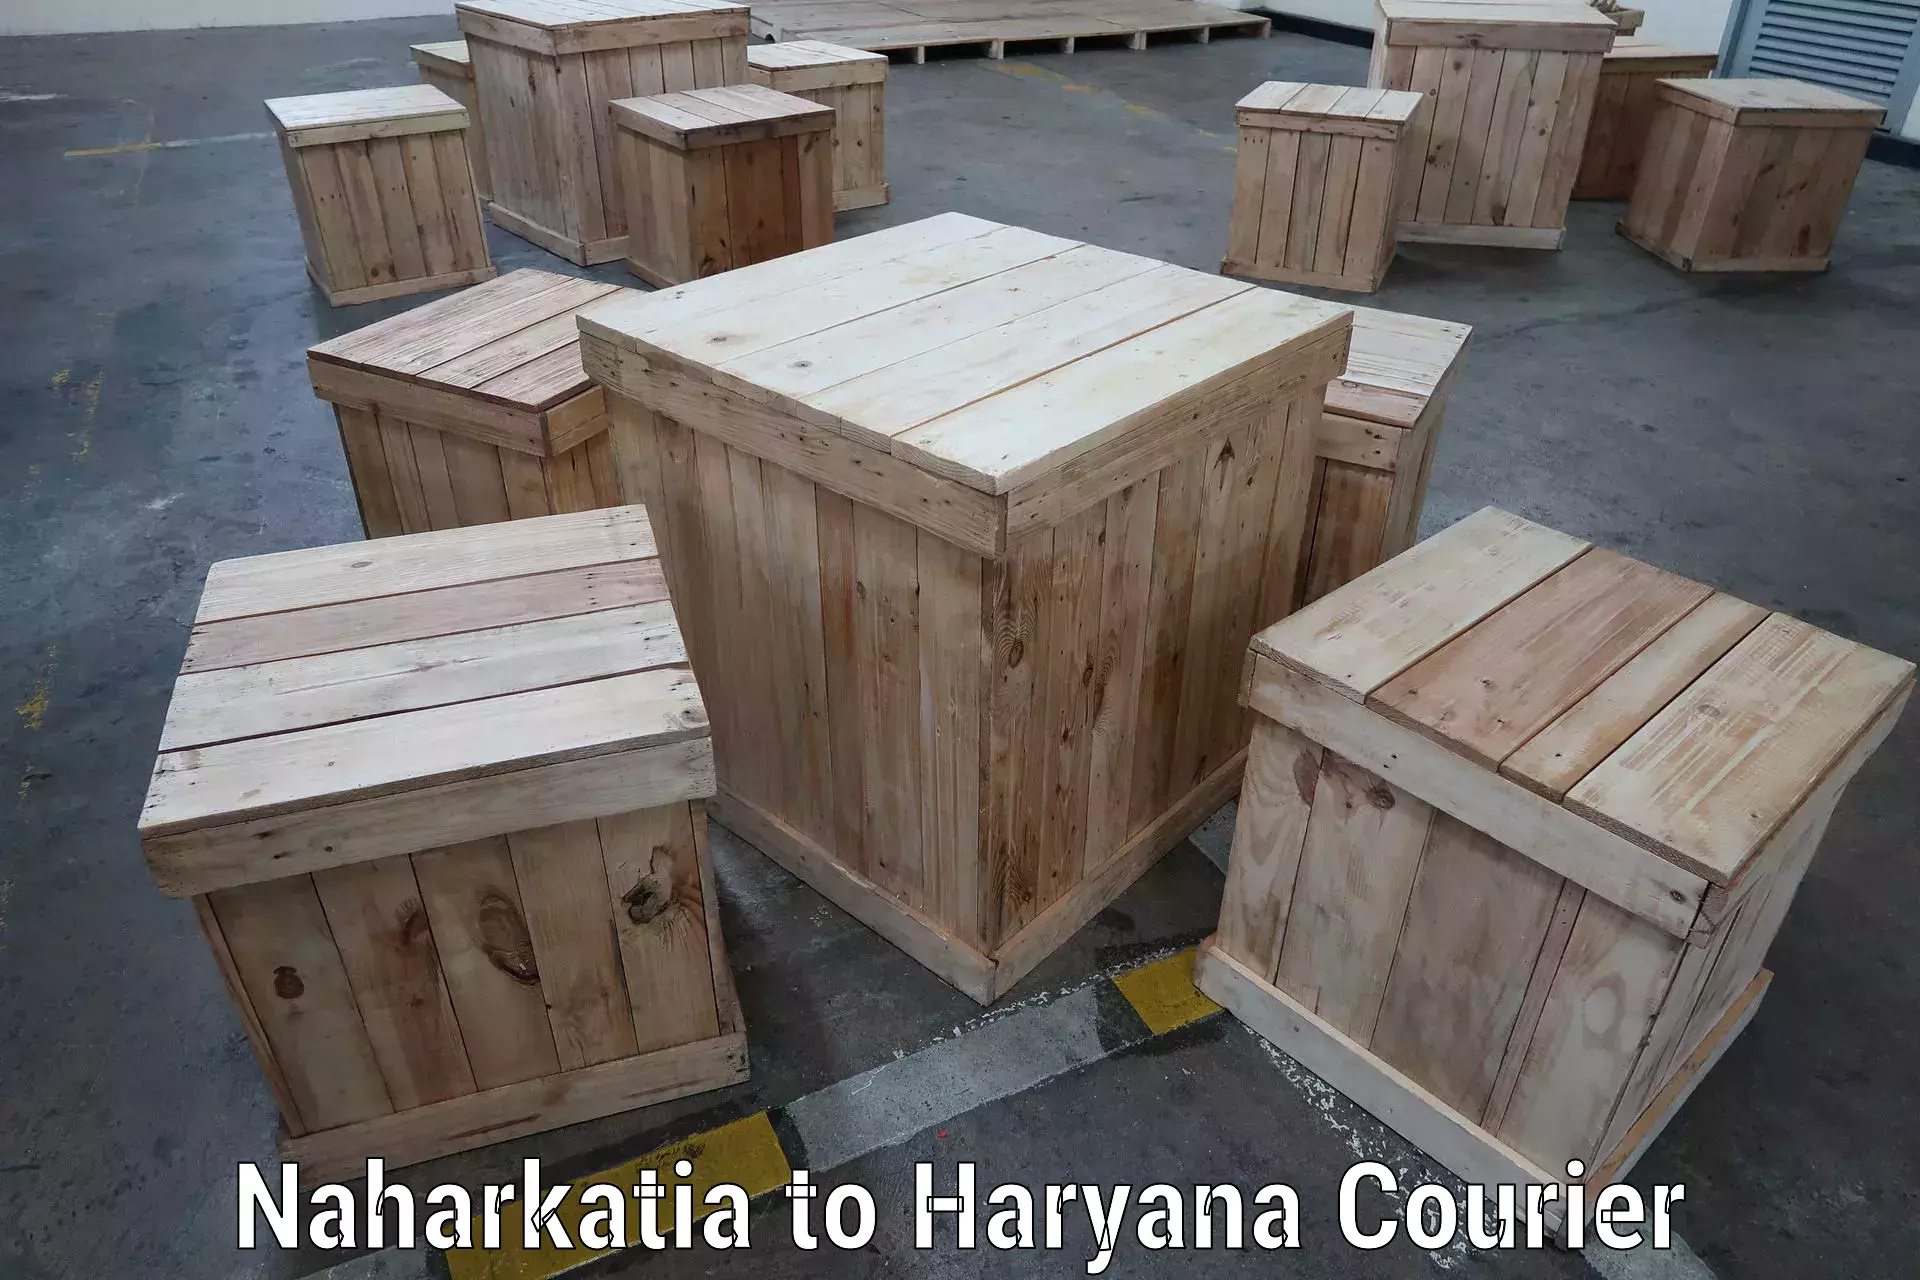 Courier service efficiency Naharkatia to Gurgaon